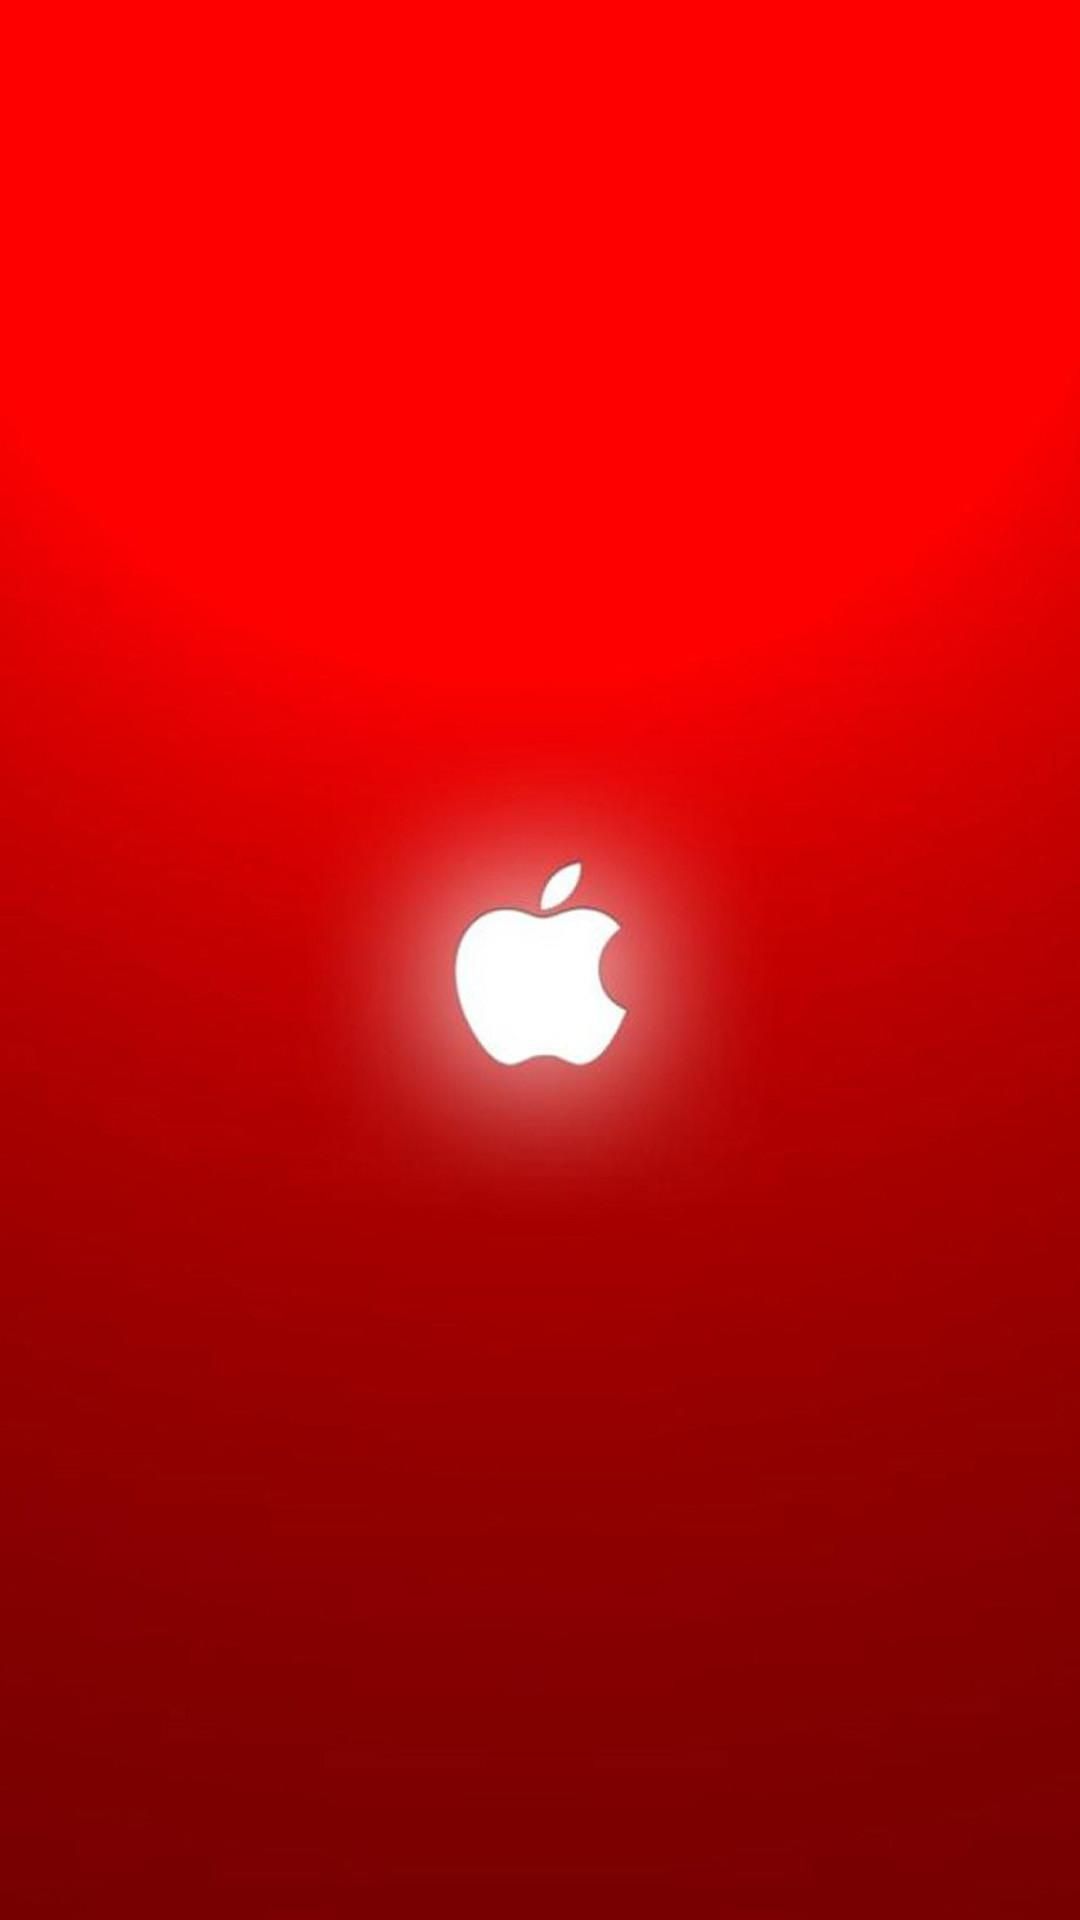 Apple Logo 4K Wallpaper Red and Black